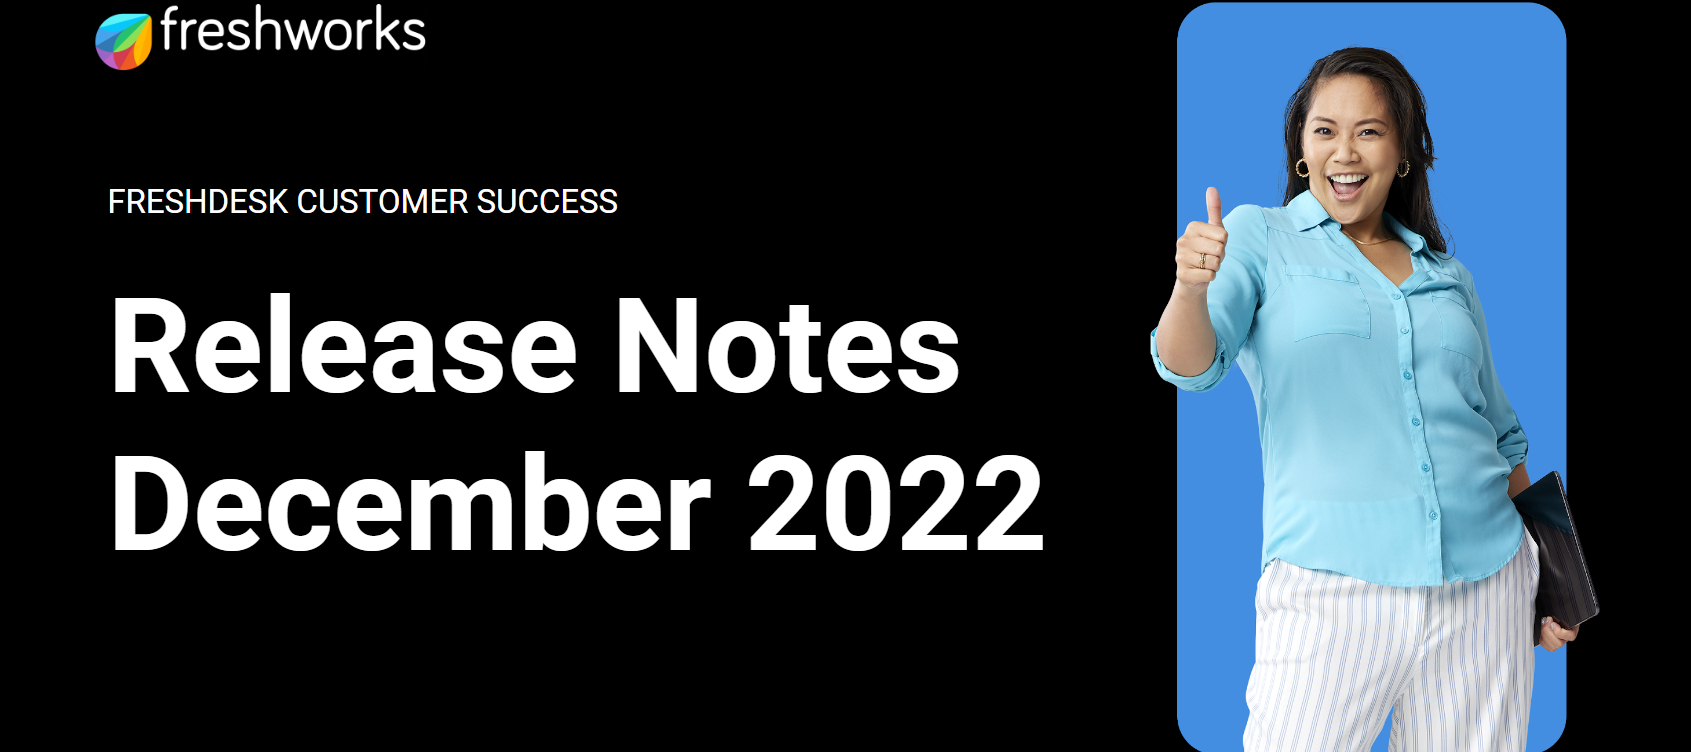 Freshdesk Customer Success Release Notes - December 2022